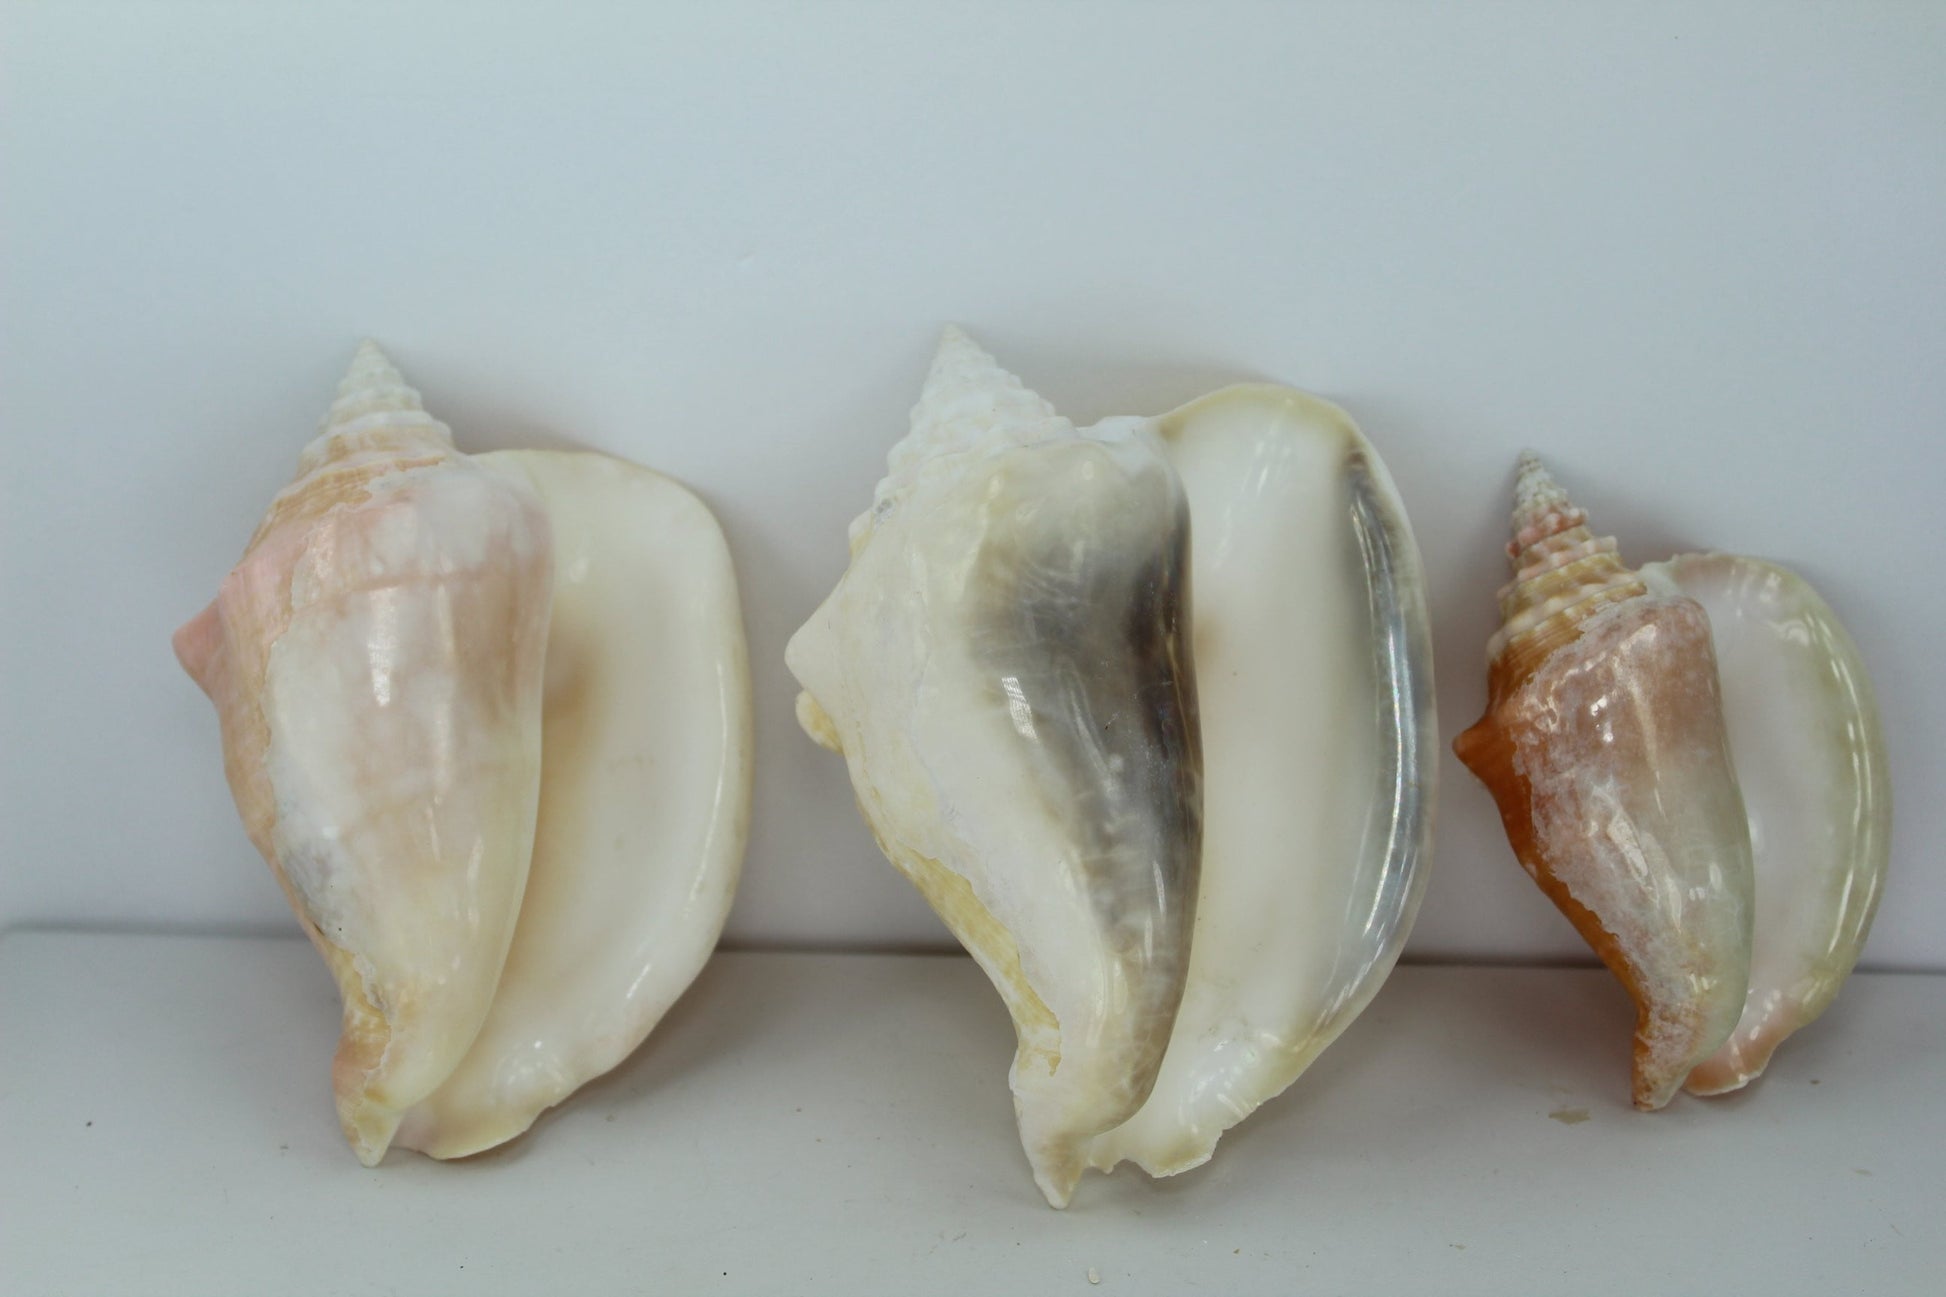 Florida Shells 3 Vintage Conchs Estate Collection Shell Art Collectibles Wreaths Aquarium  peach